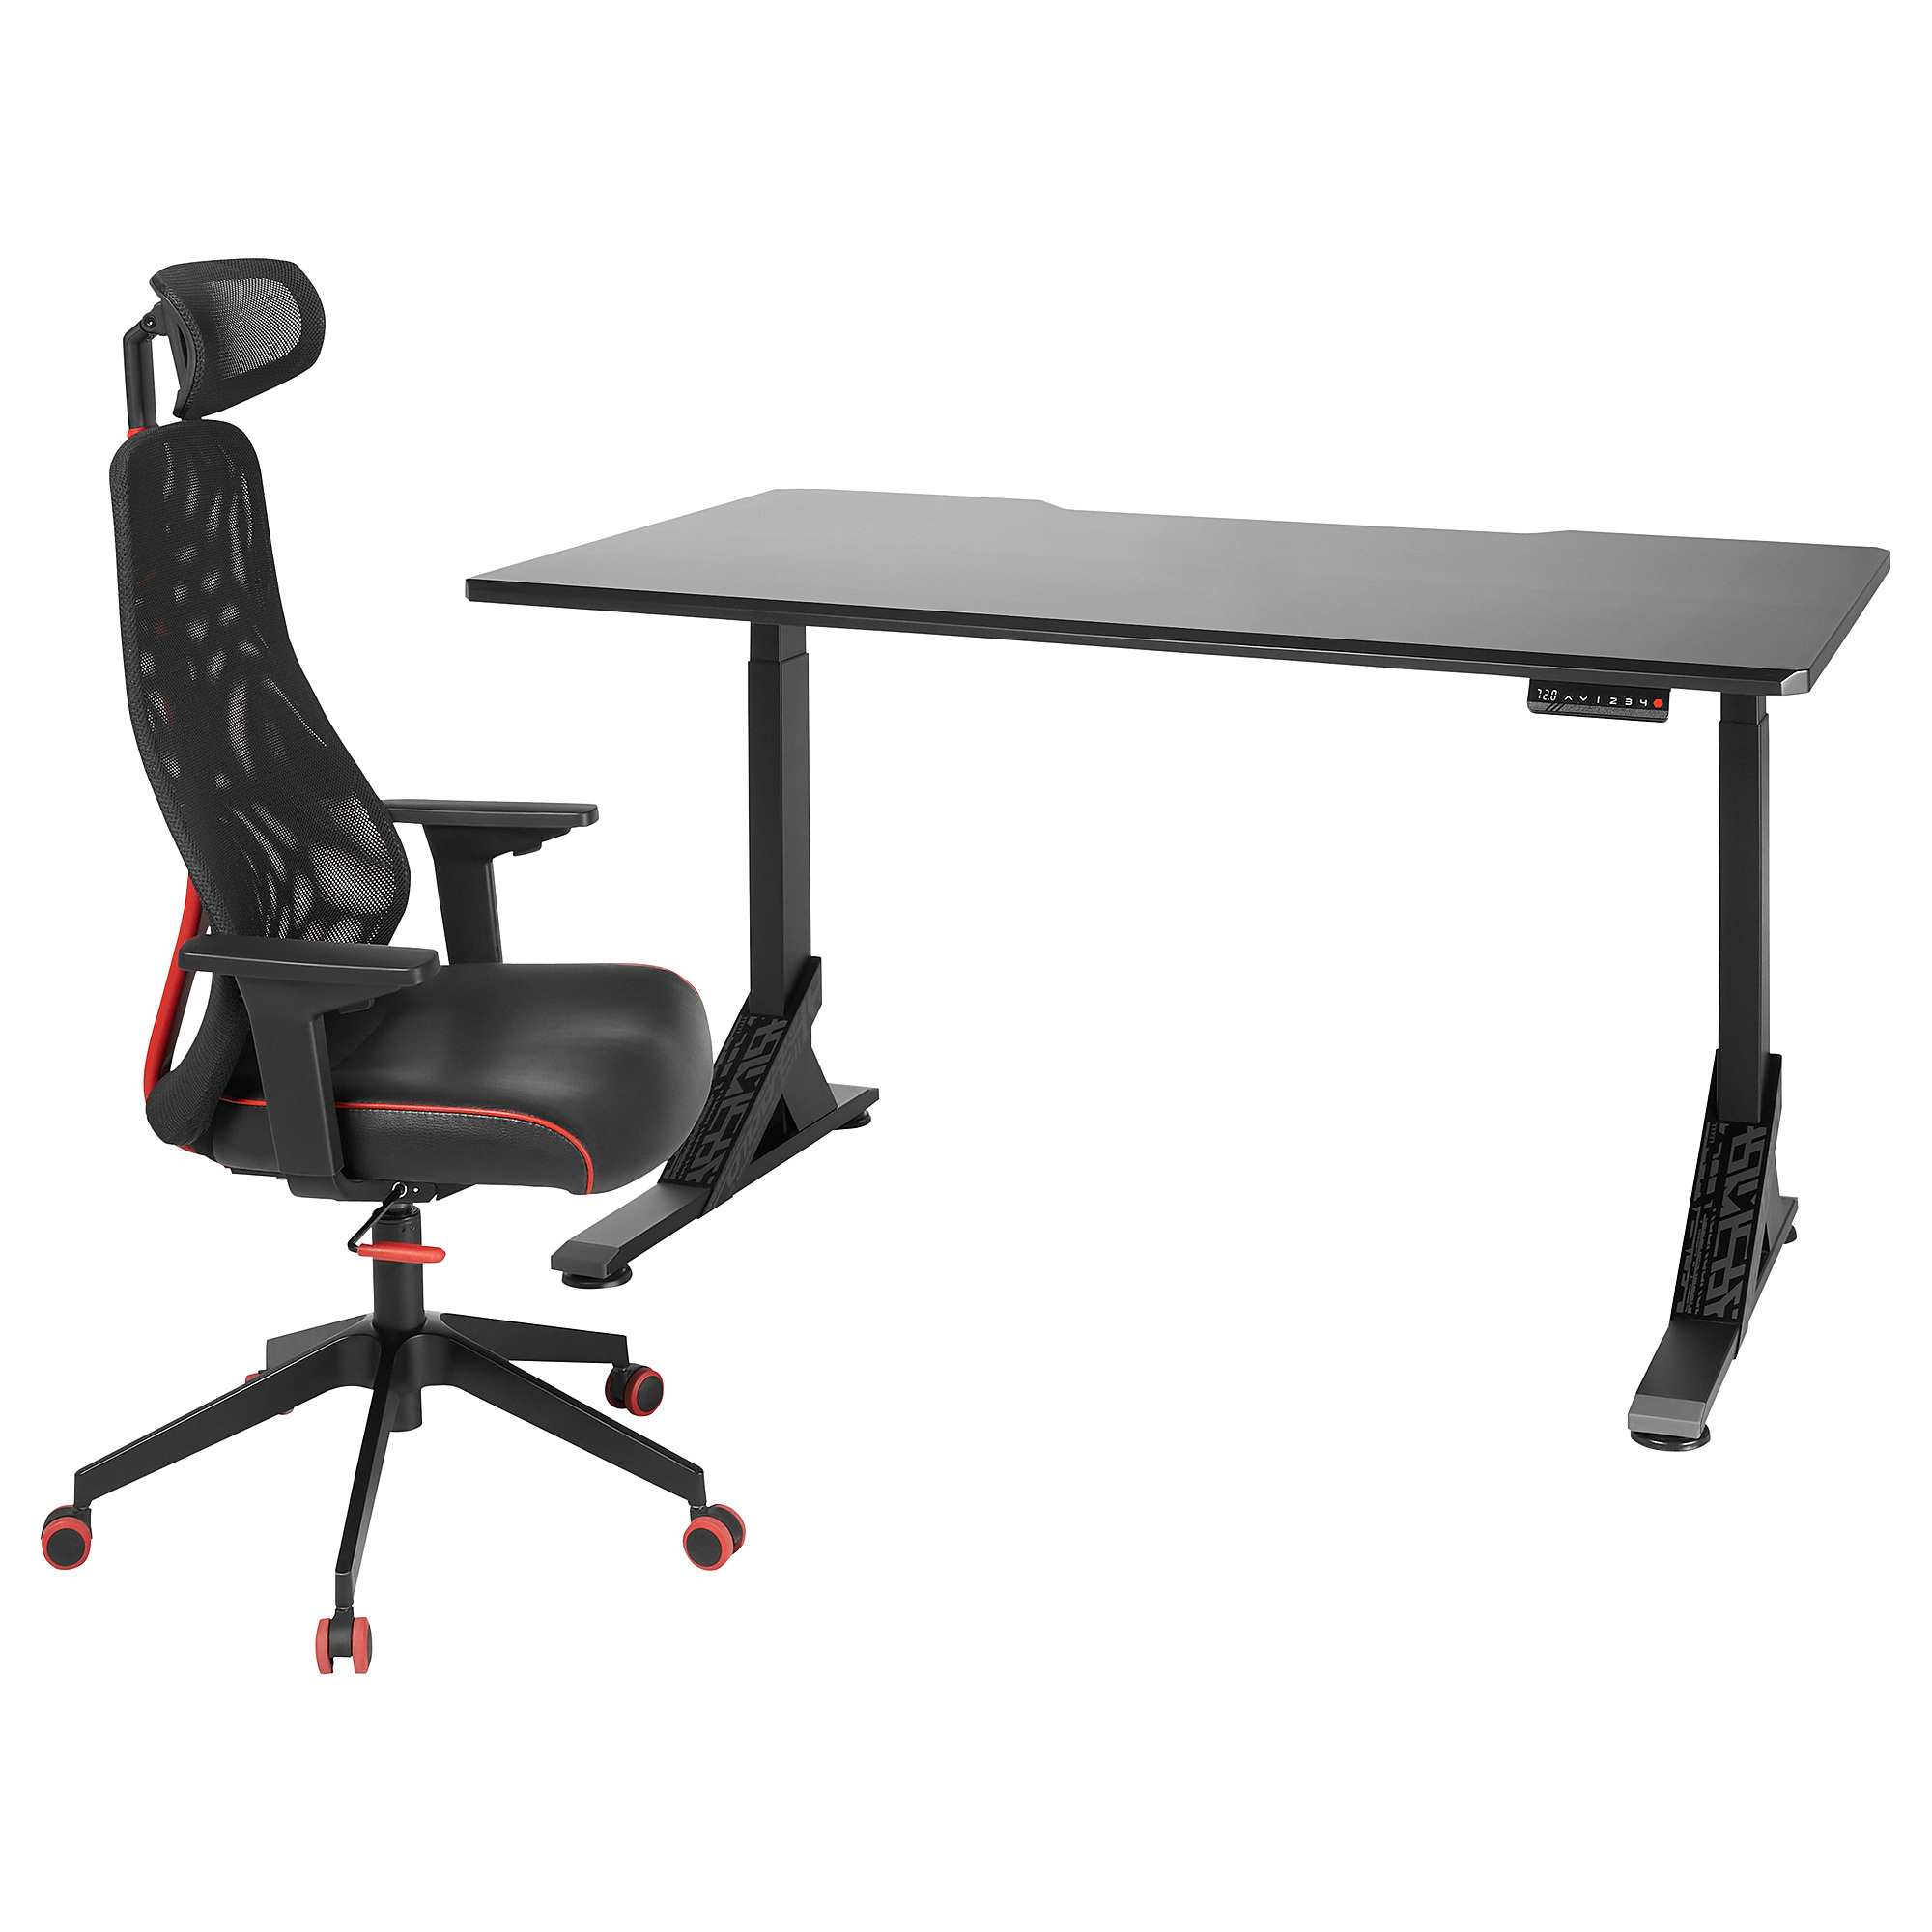 UPPSPEL/MATCHSPEL gaming desk and chair